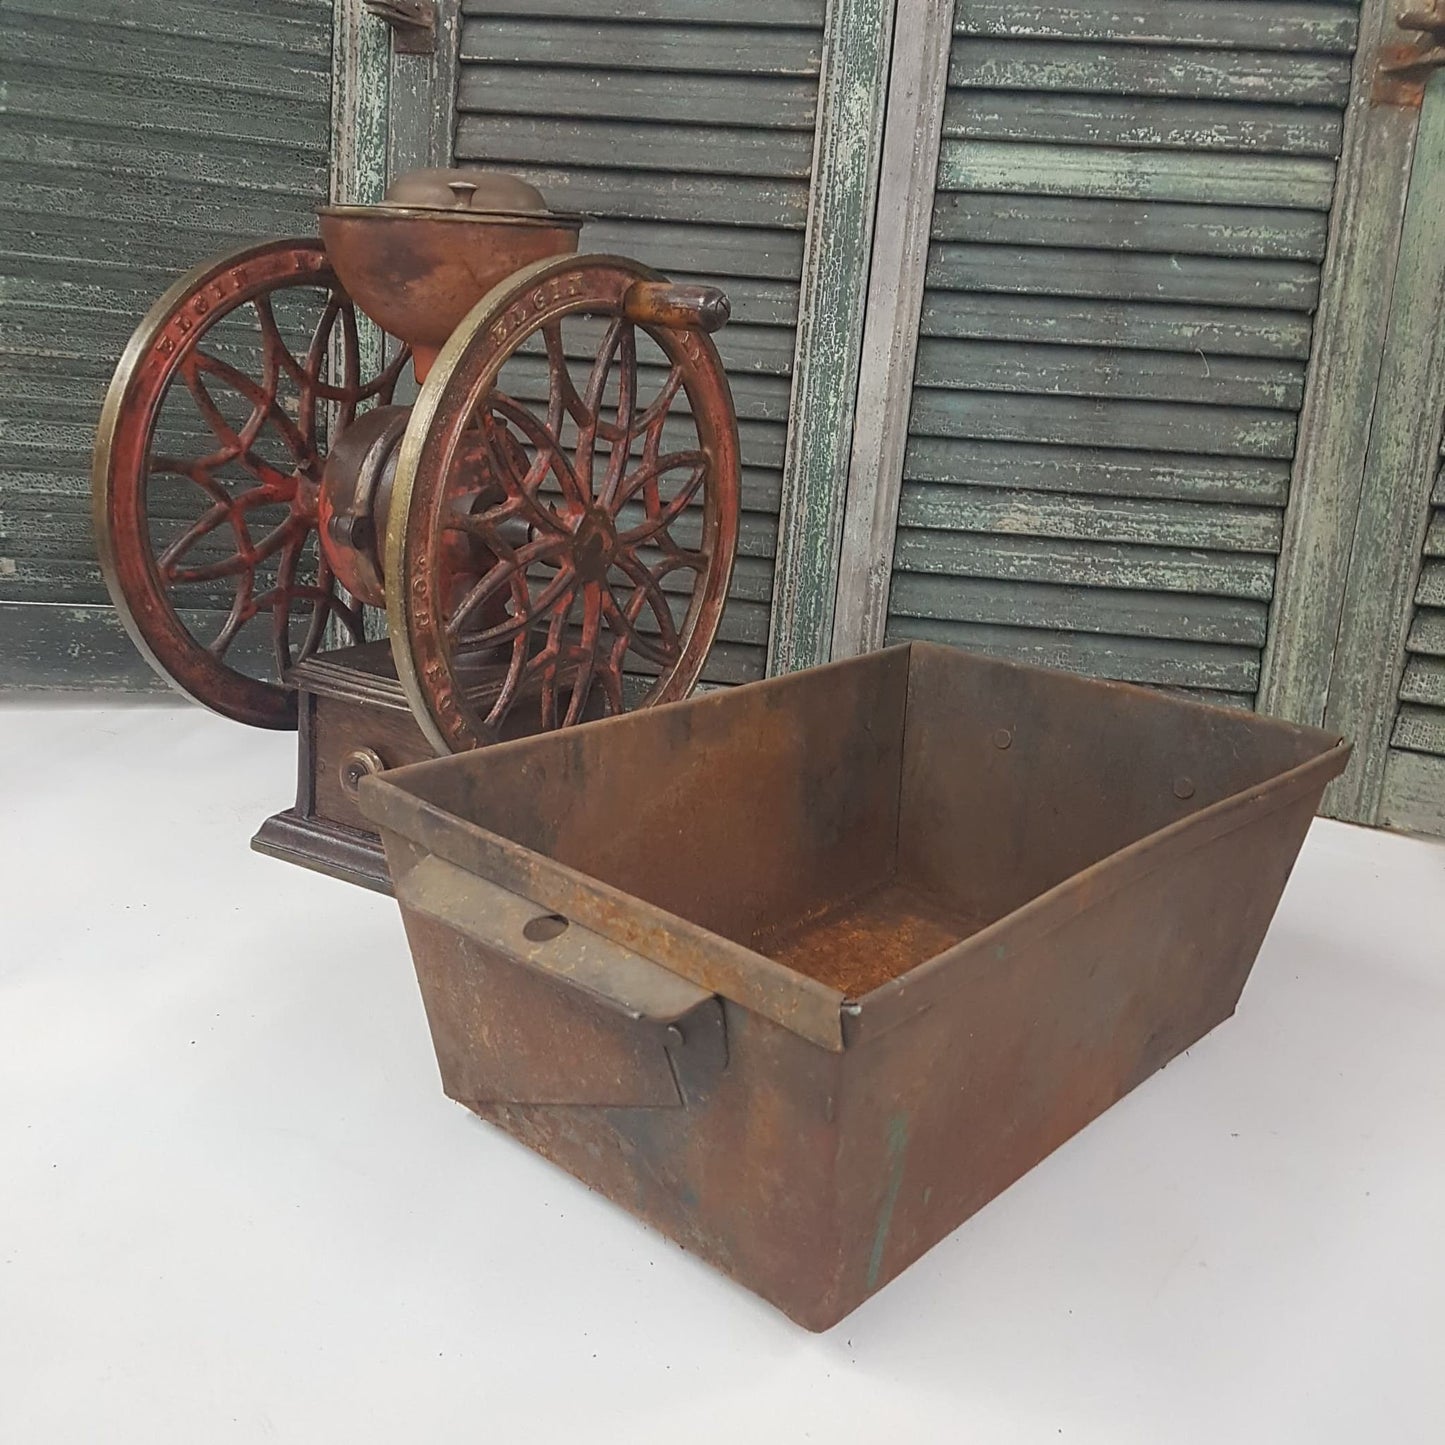 antique bin industrial metal box or basket primitive old for storage or display rustic weathered vtg old